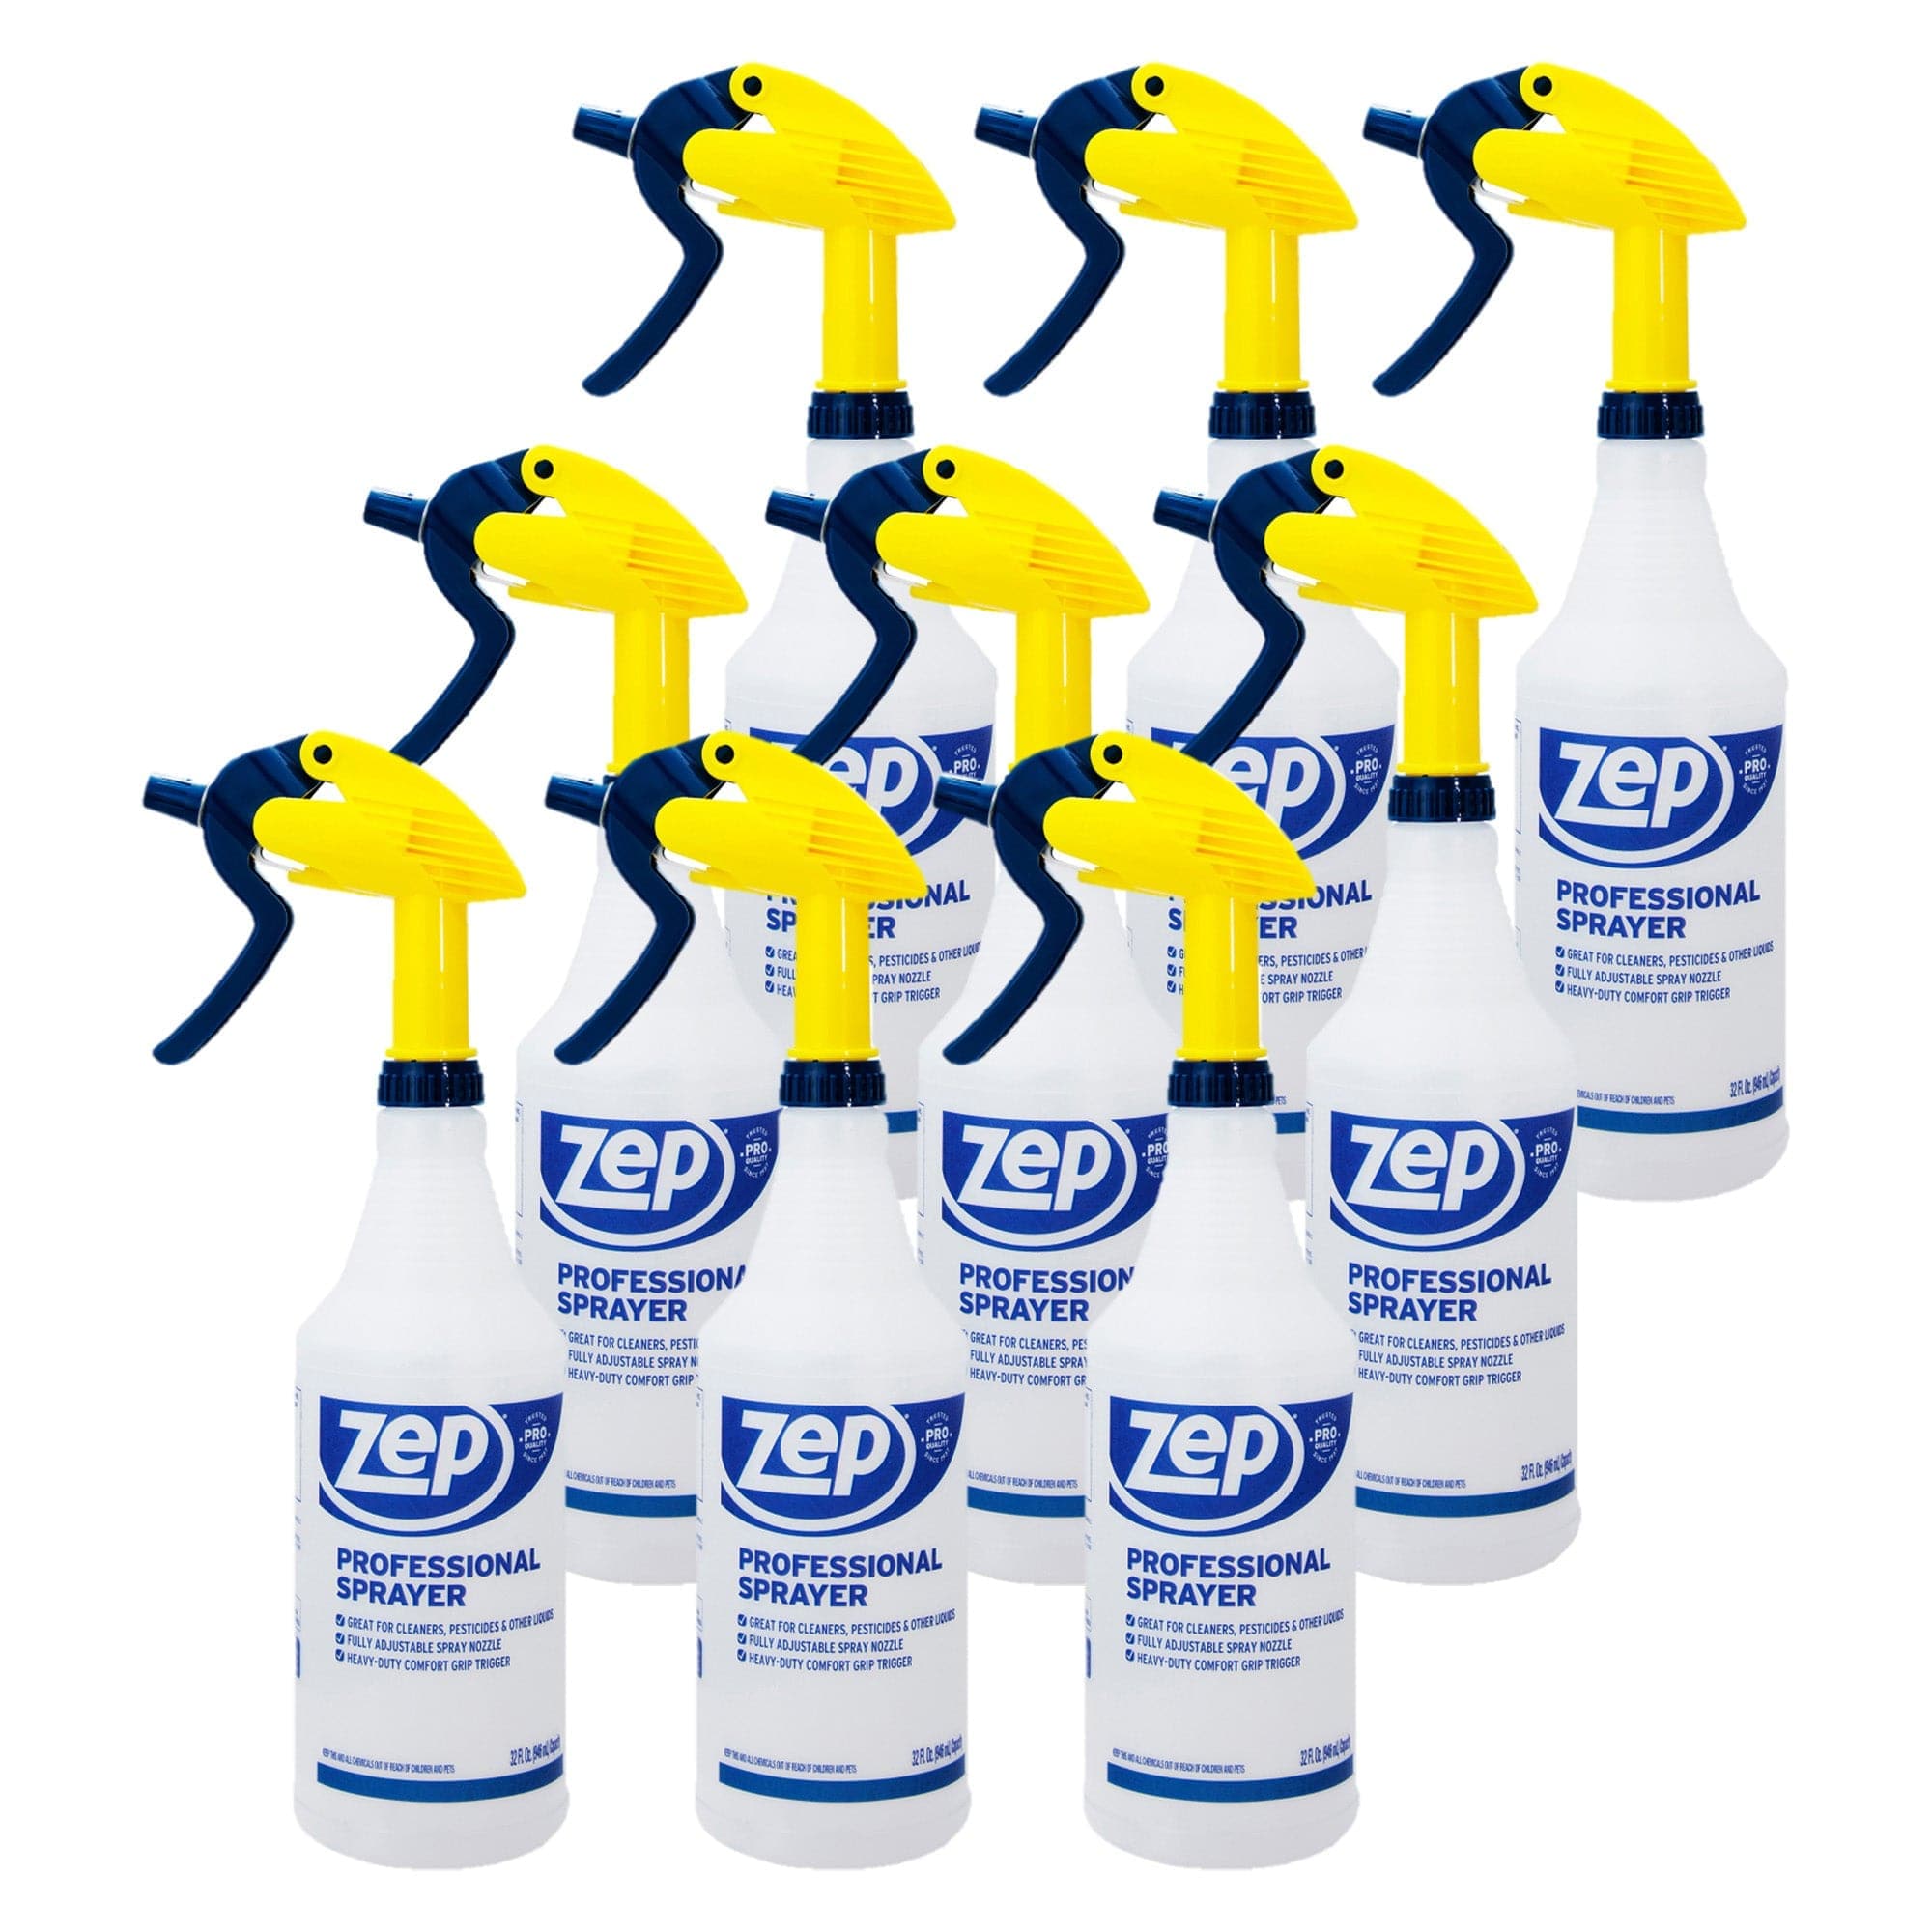 Zep Professional Sprayer Self Merchandising  Merchandising displays,  Sprayers, Merchandise